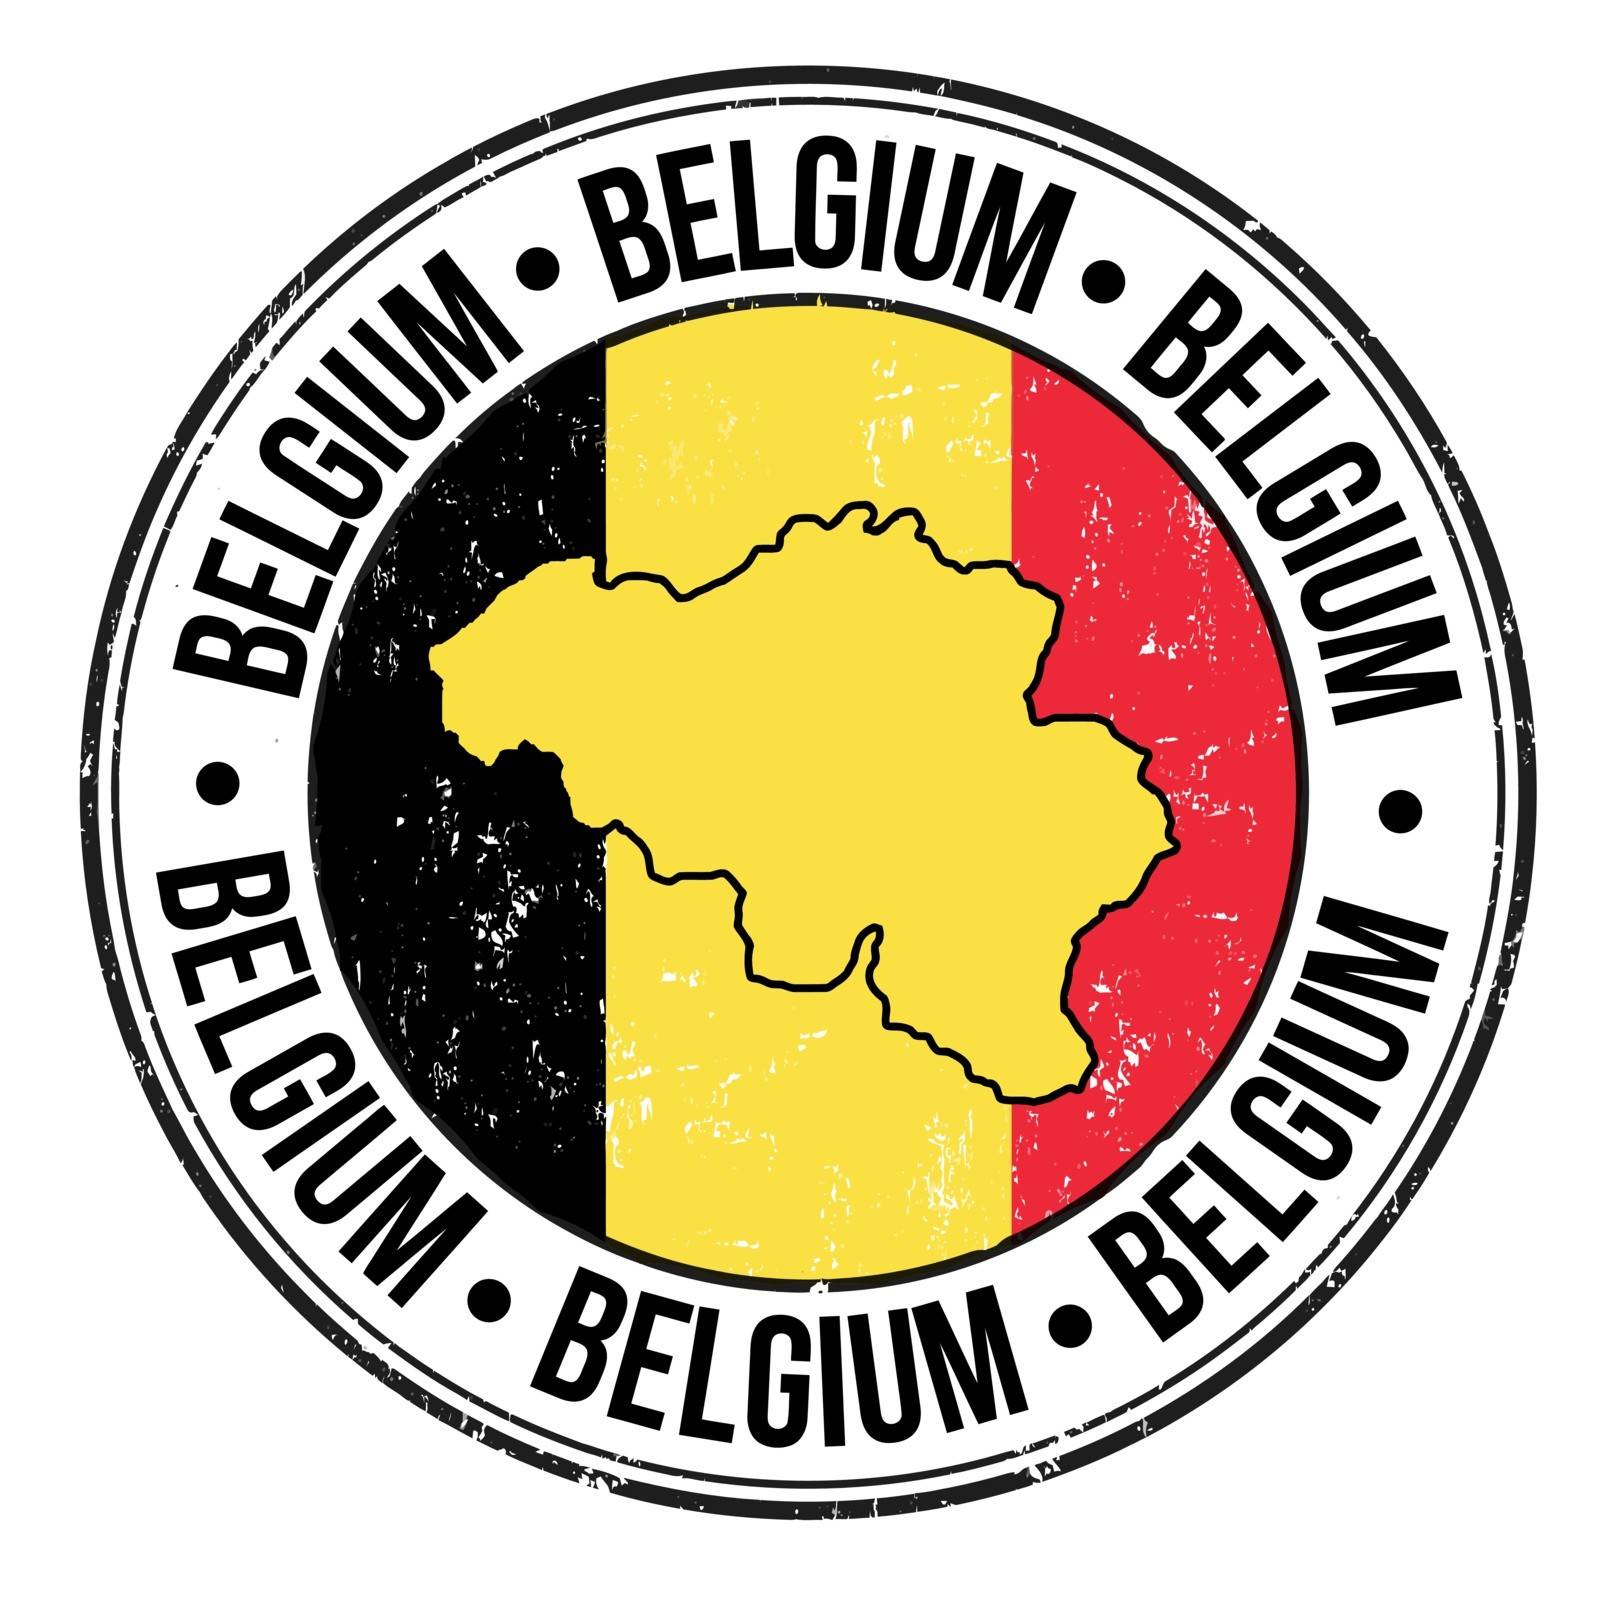 Belgium stamp by roxanabalint